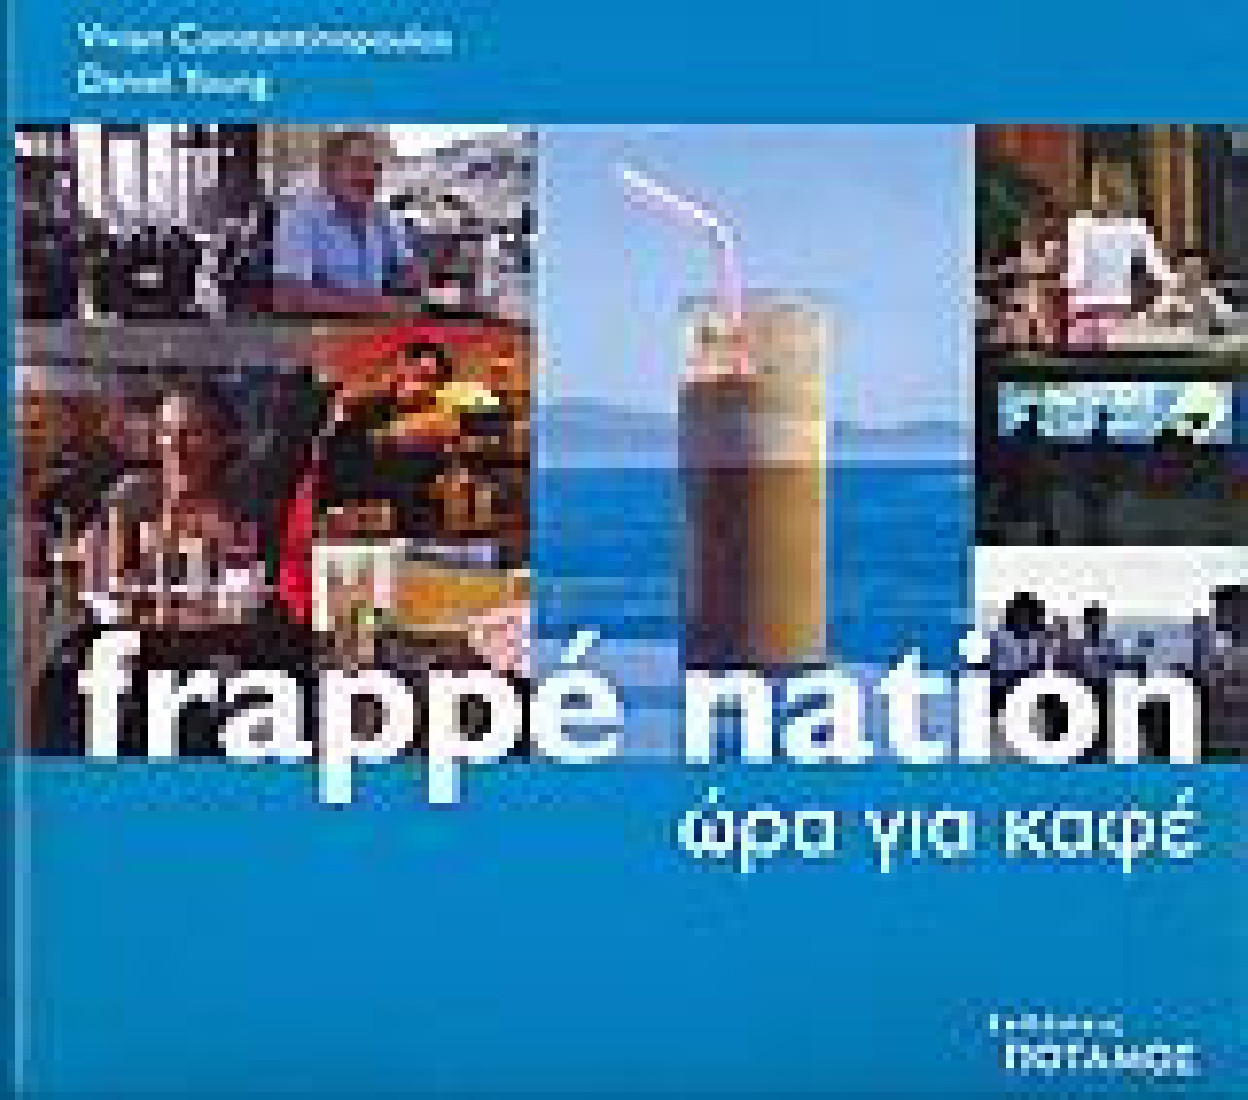 Frappé Nation